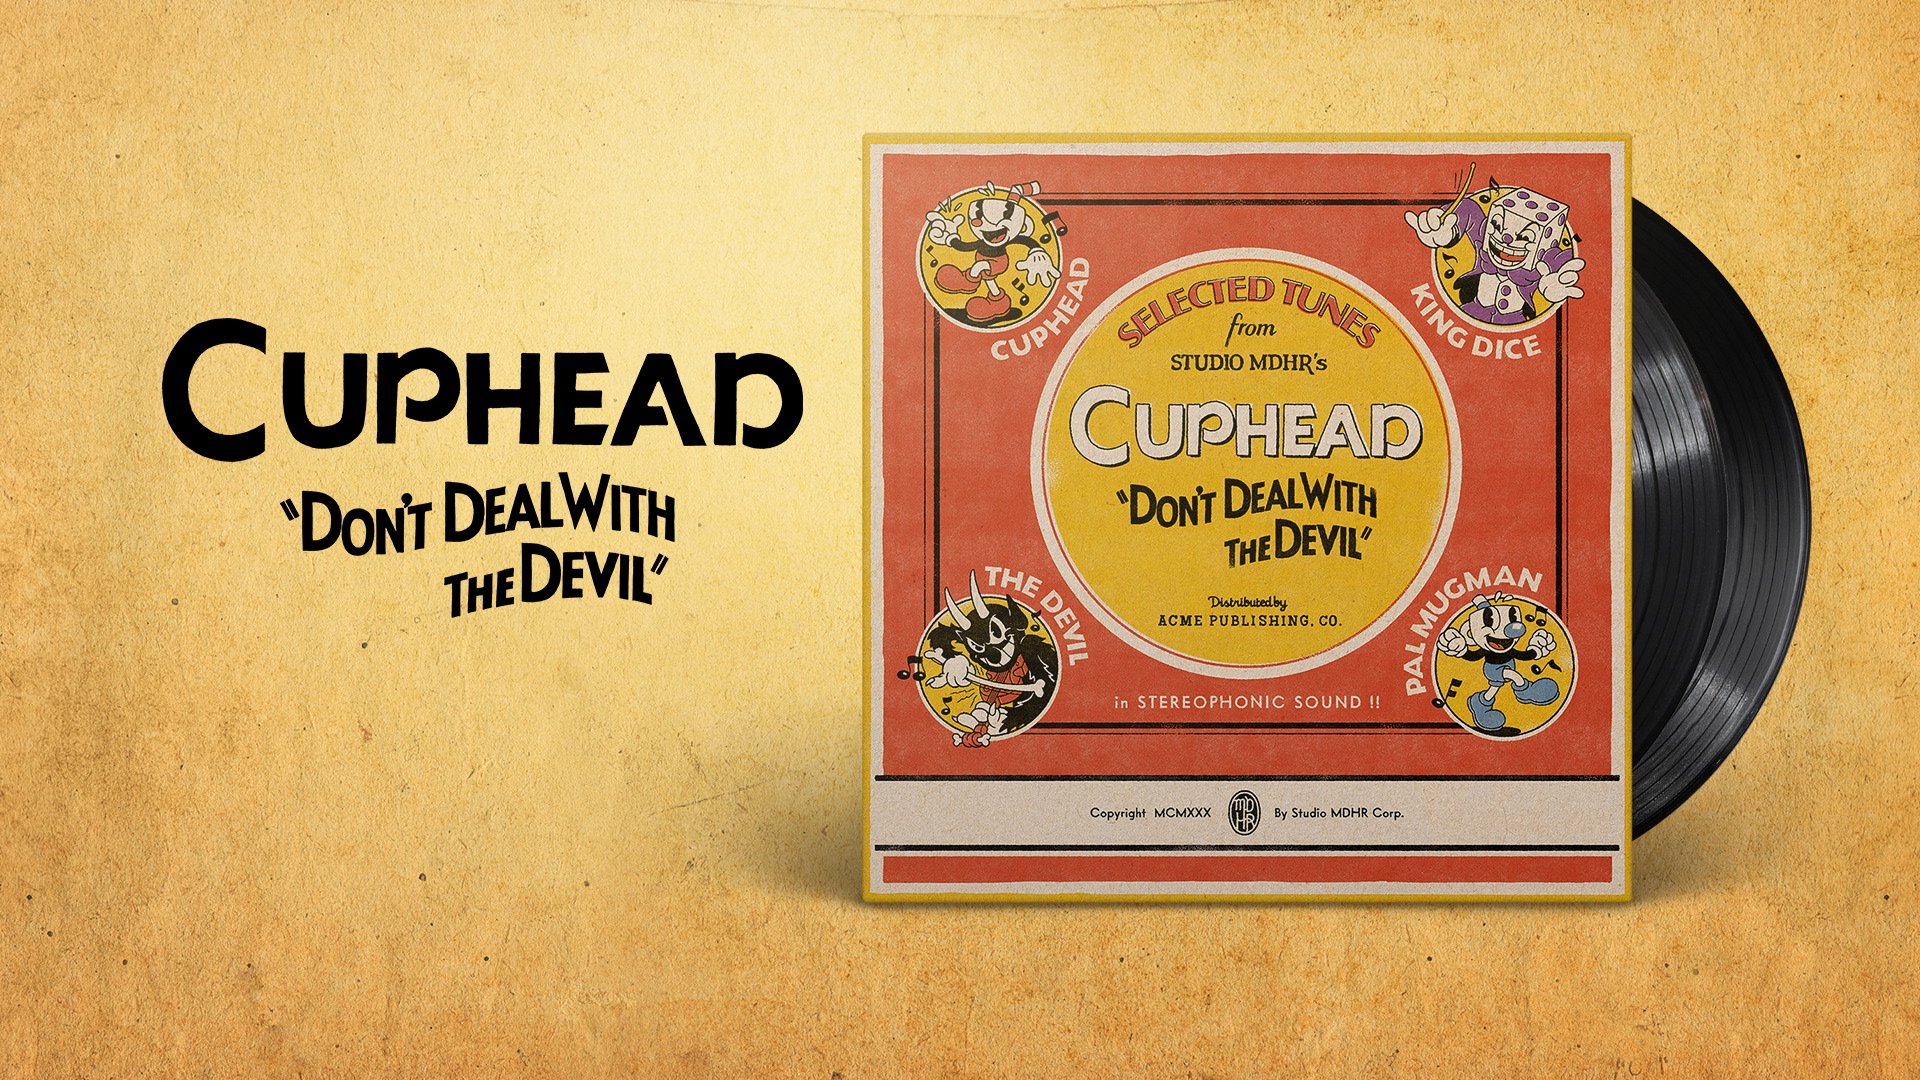 Cuphead」、2枚組の“ベスト盤”アナログサントラが予約開始 - GAME Watch